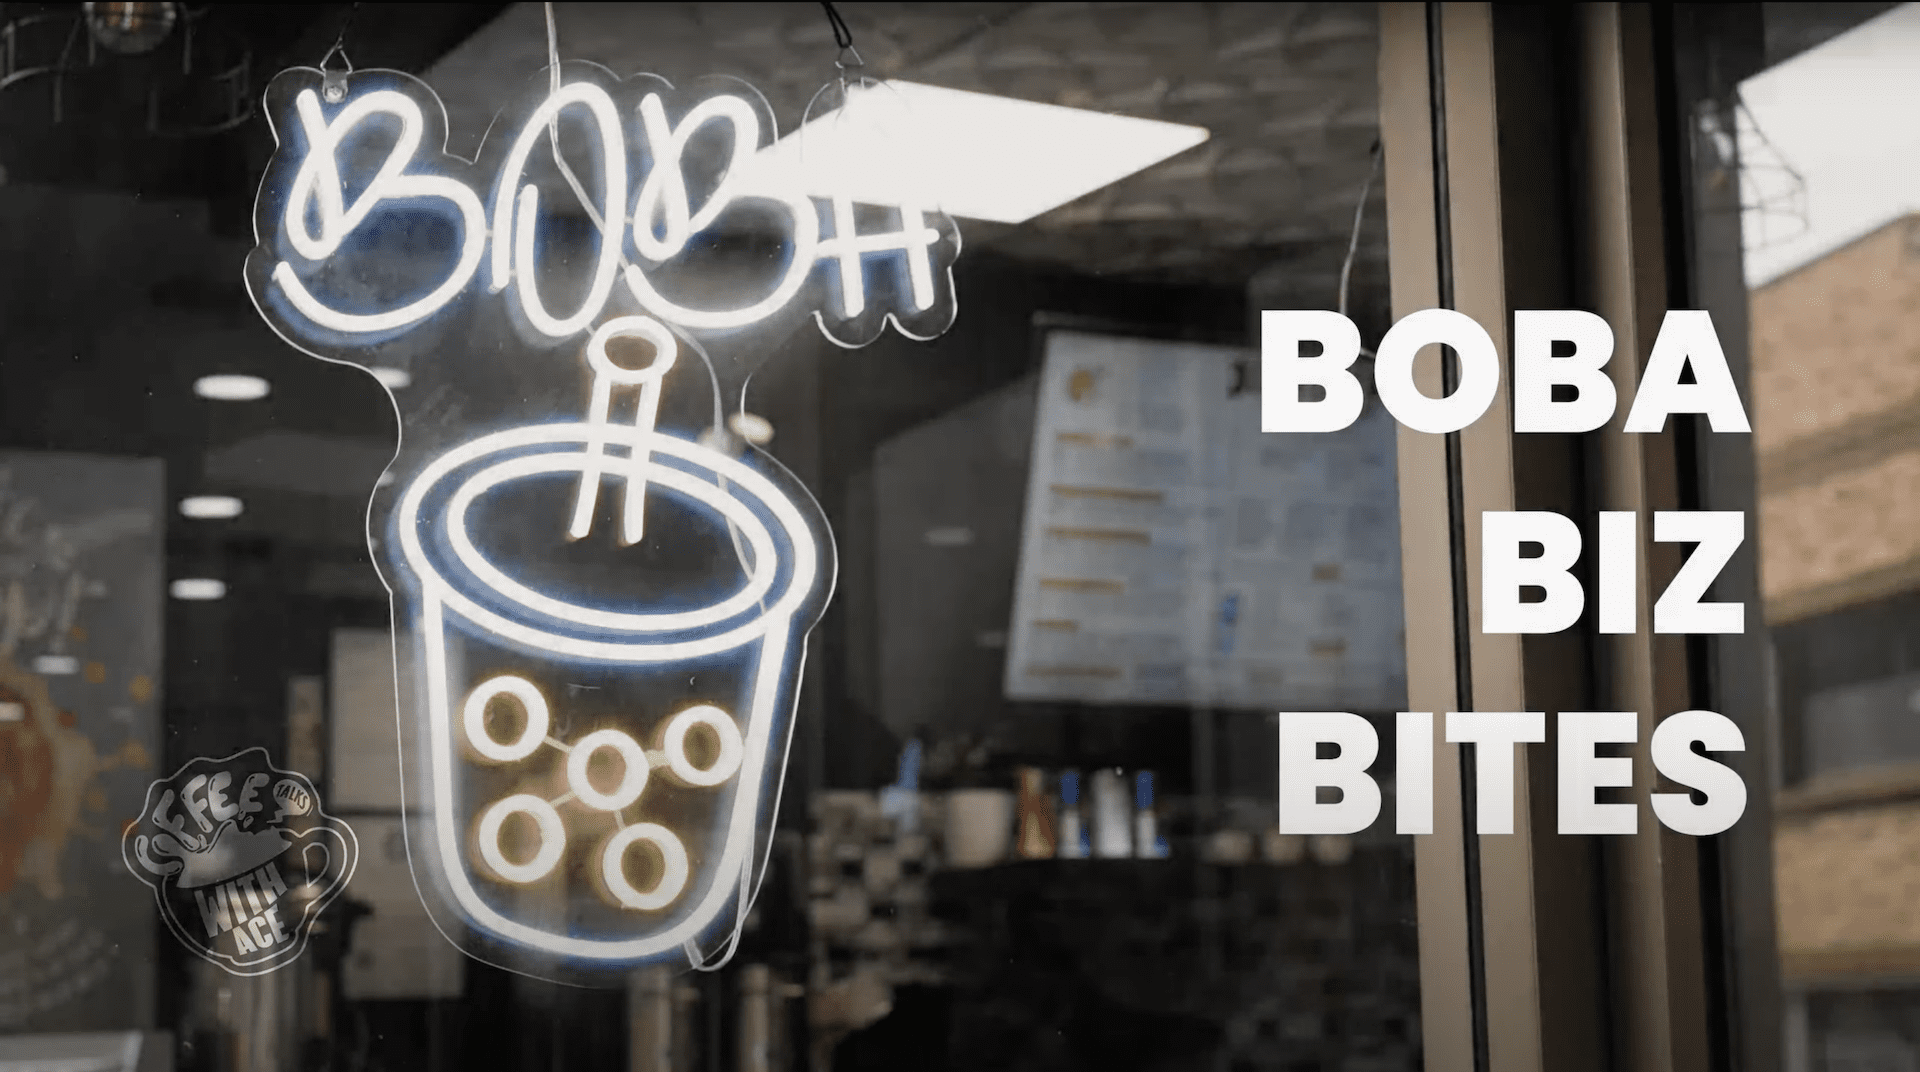 Video: Biggest Little Boba Shop